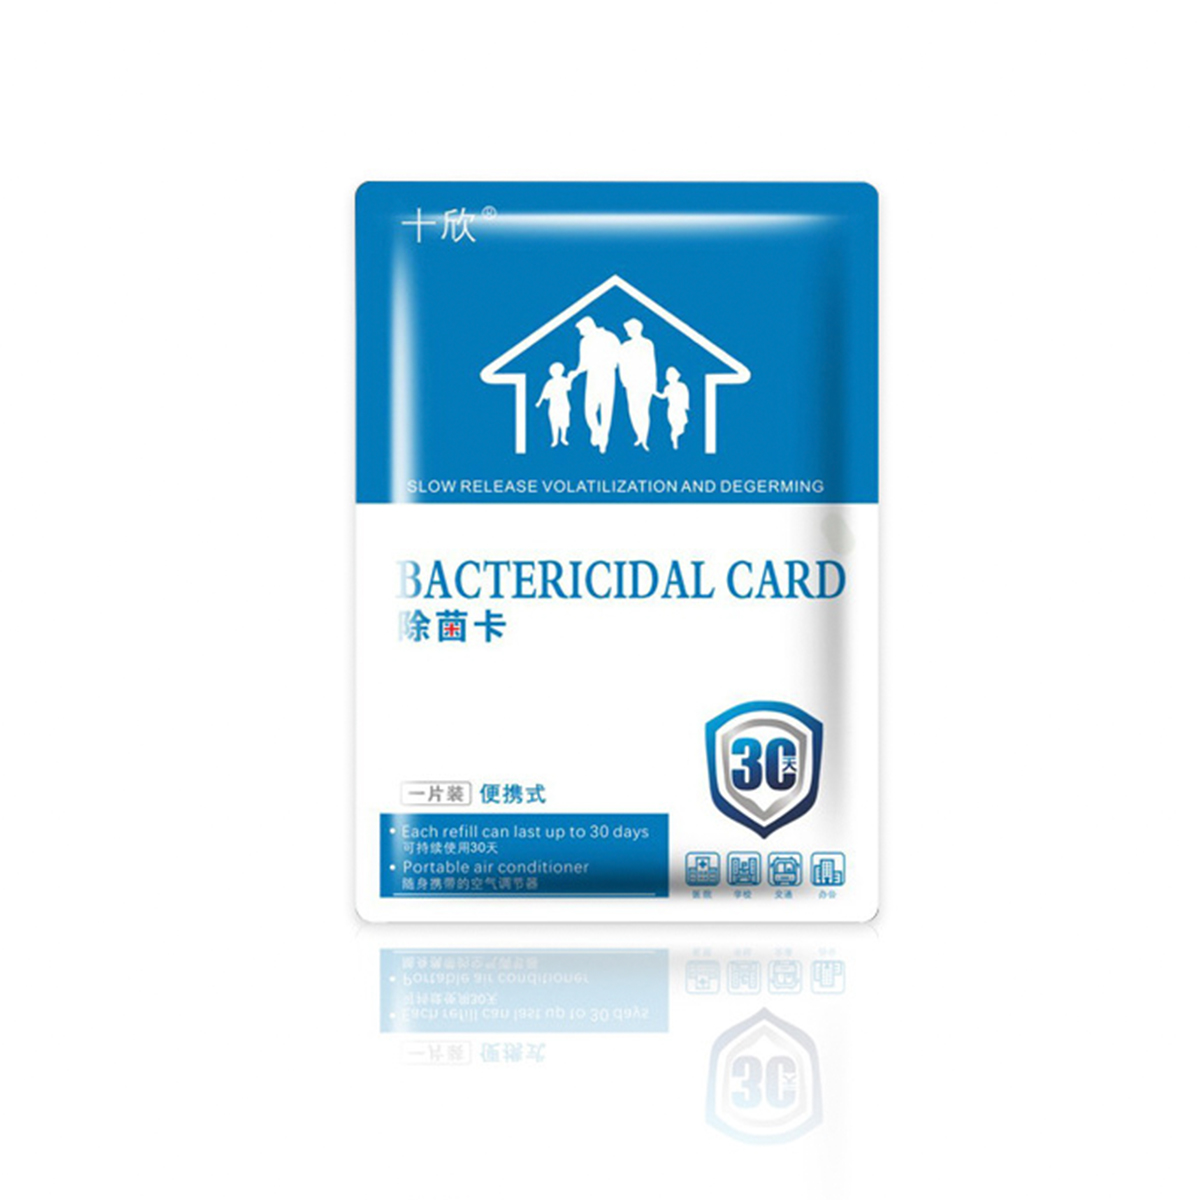 Sanitization-Card-30-Days-Validity-Period-1-Cubic-Meter-Aiir-Sterilization-Card-1794583-4